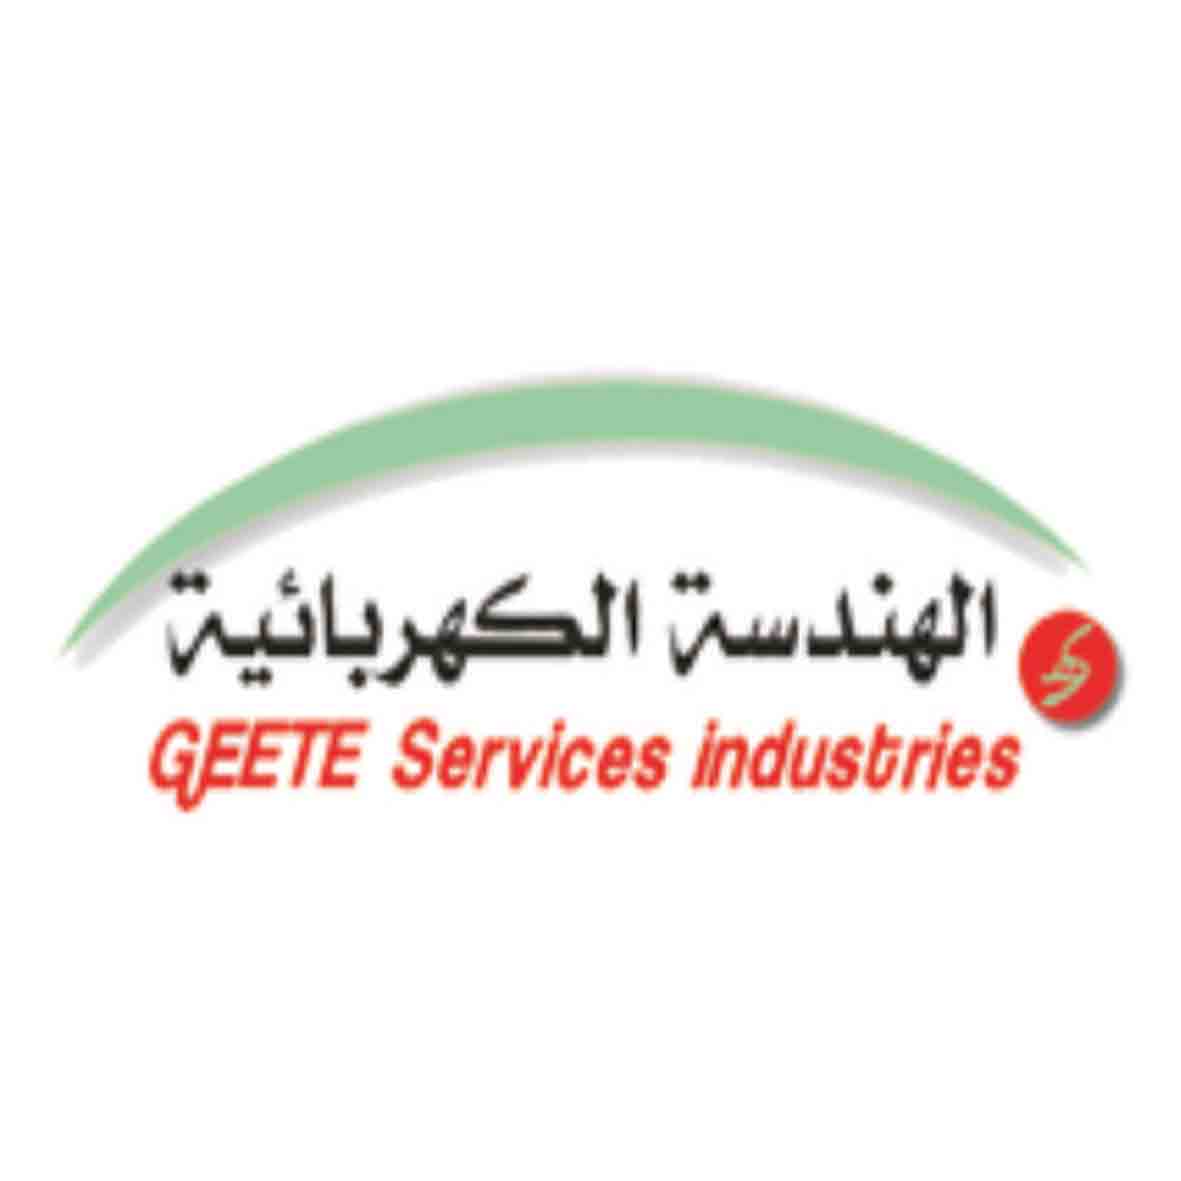 Geete services industries